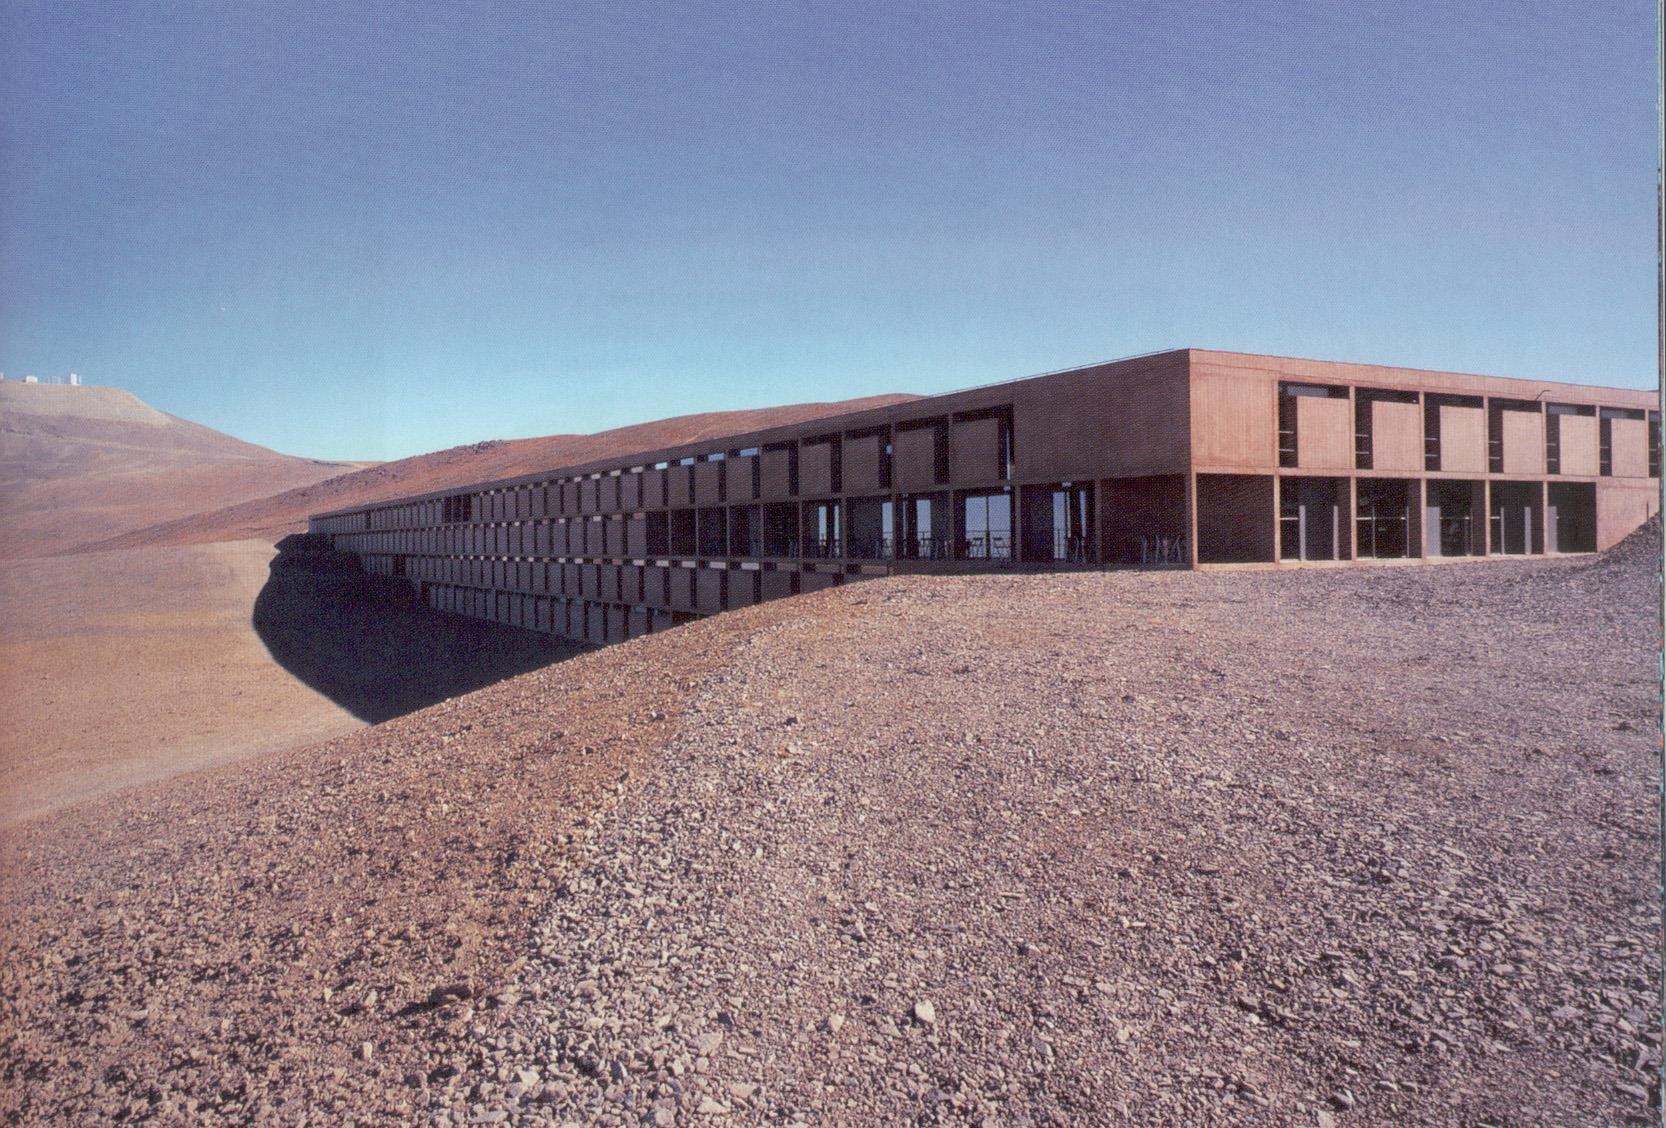 ESO Hotel, Atacama Desert, Chile,